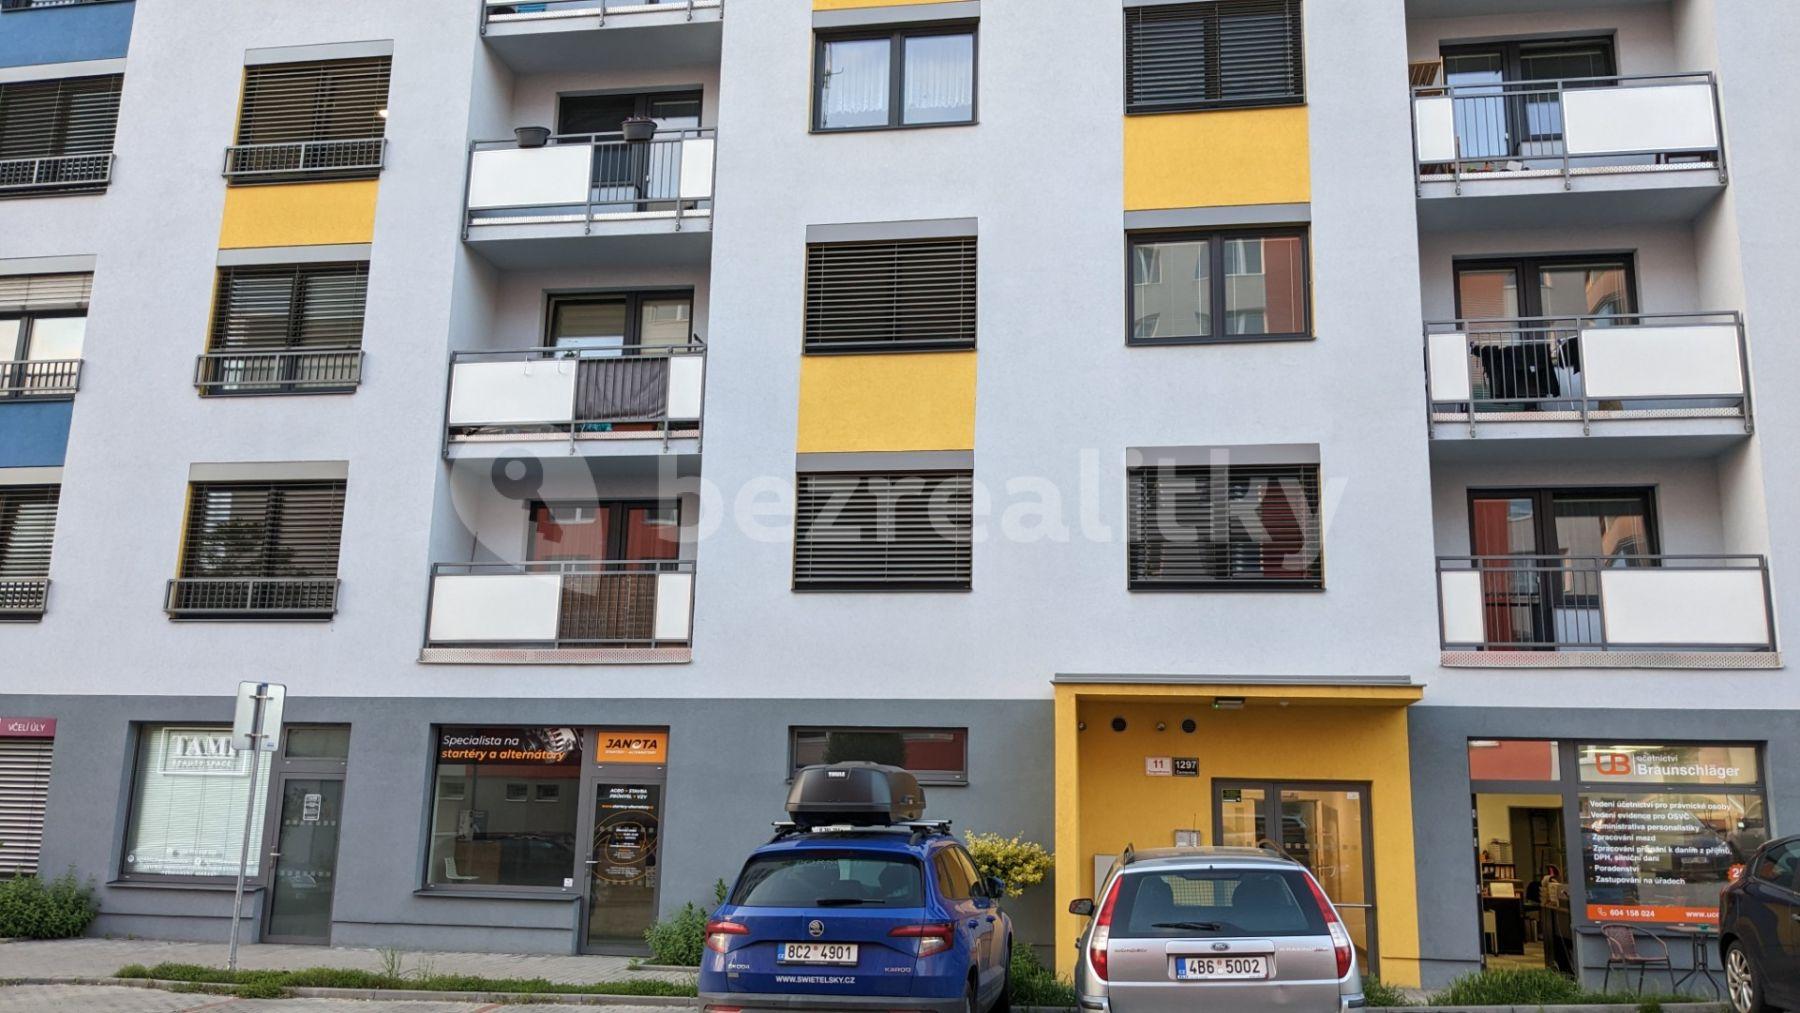 Studio flat to rent, 40 m², Turgeněvova, Brno, Jihomoravský Region